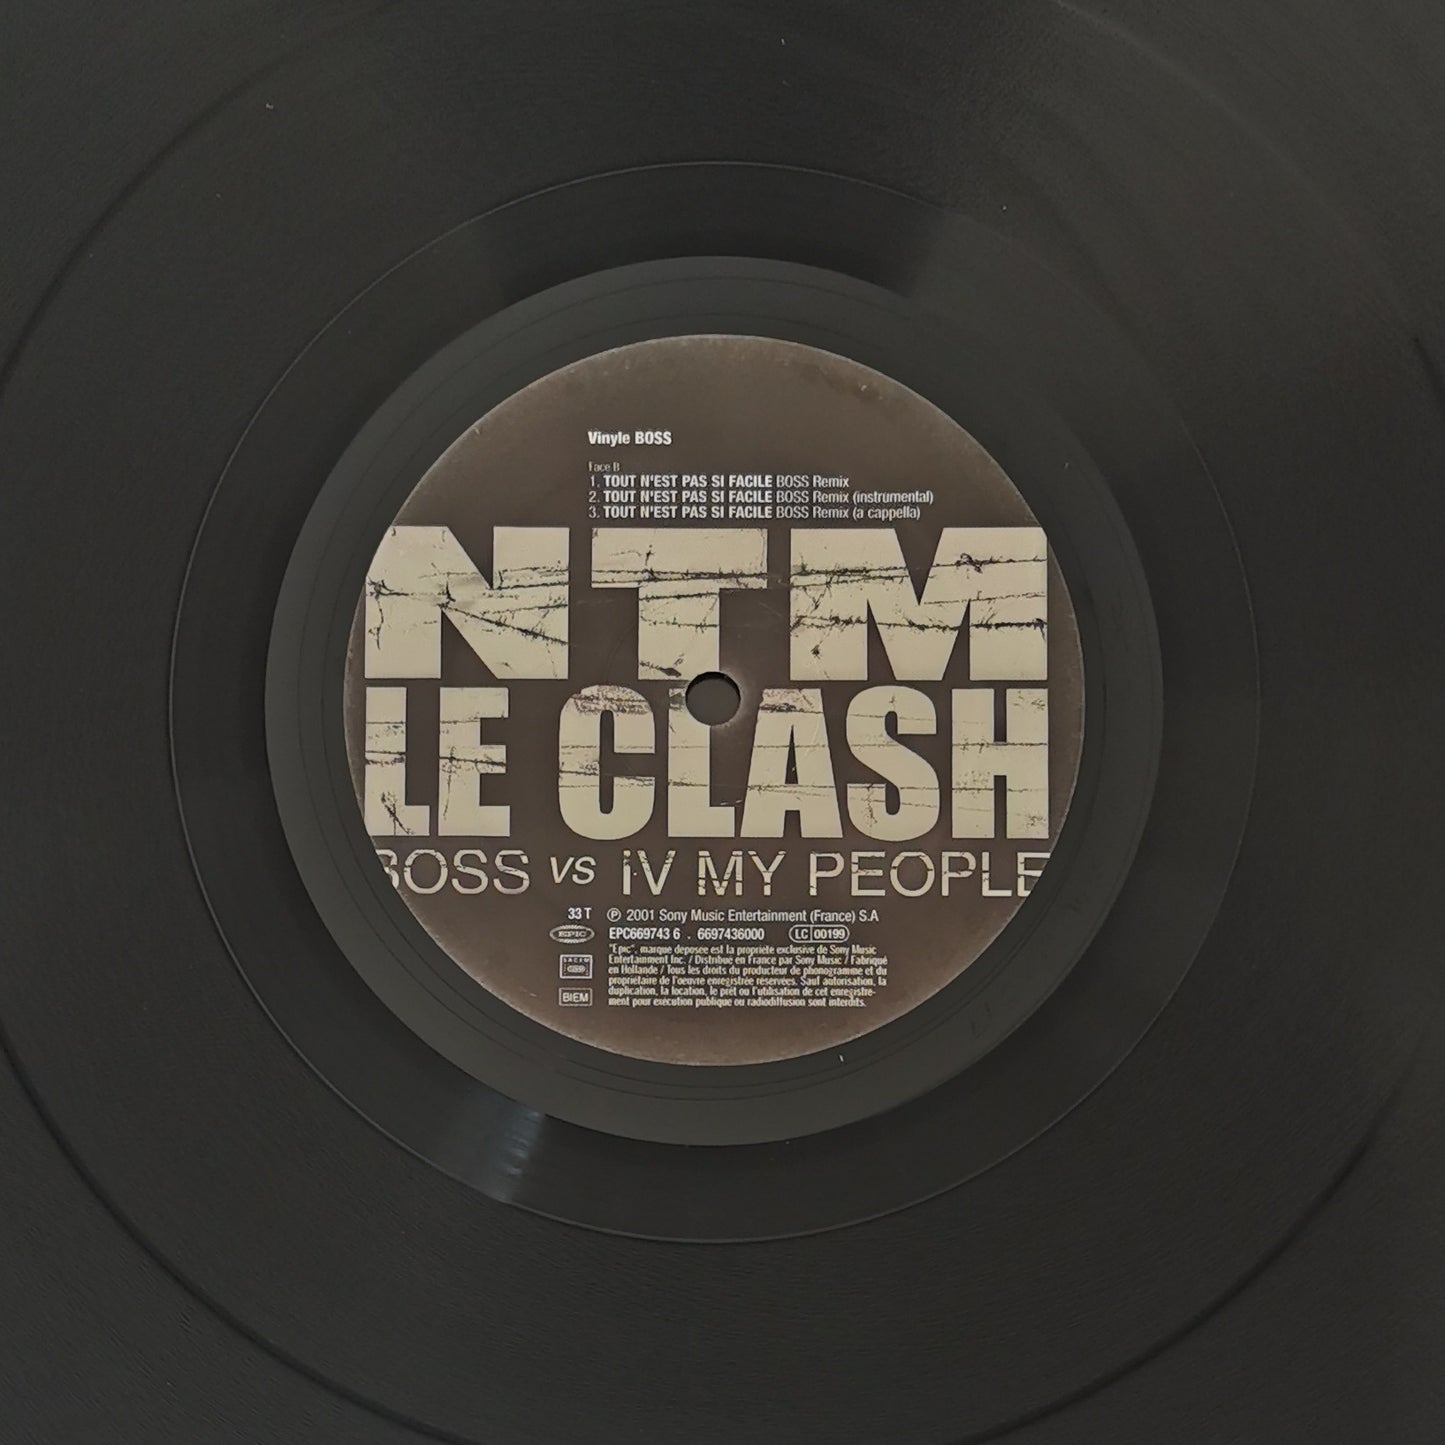 NTM - Le Clash: BOSS Vs IV My People (Round 4)